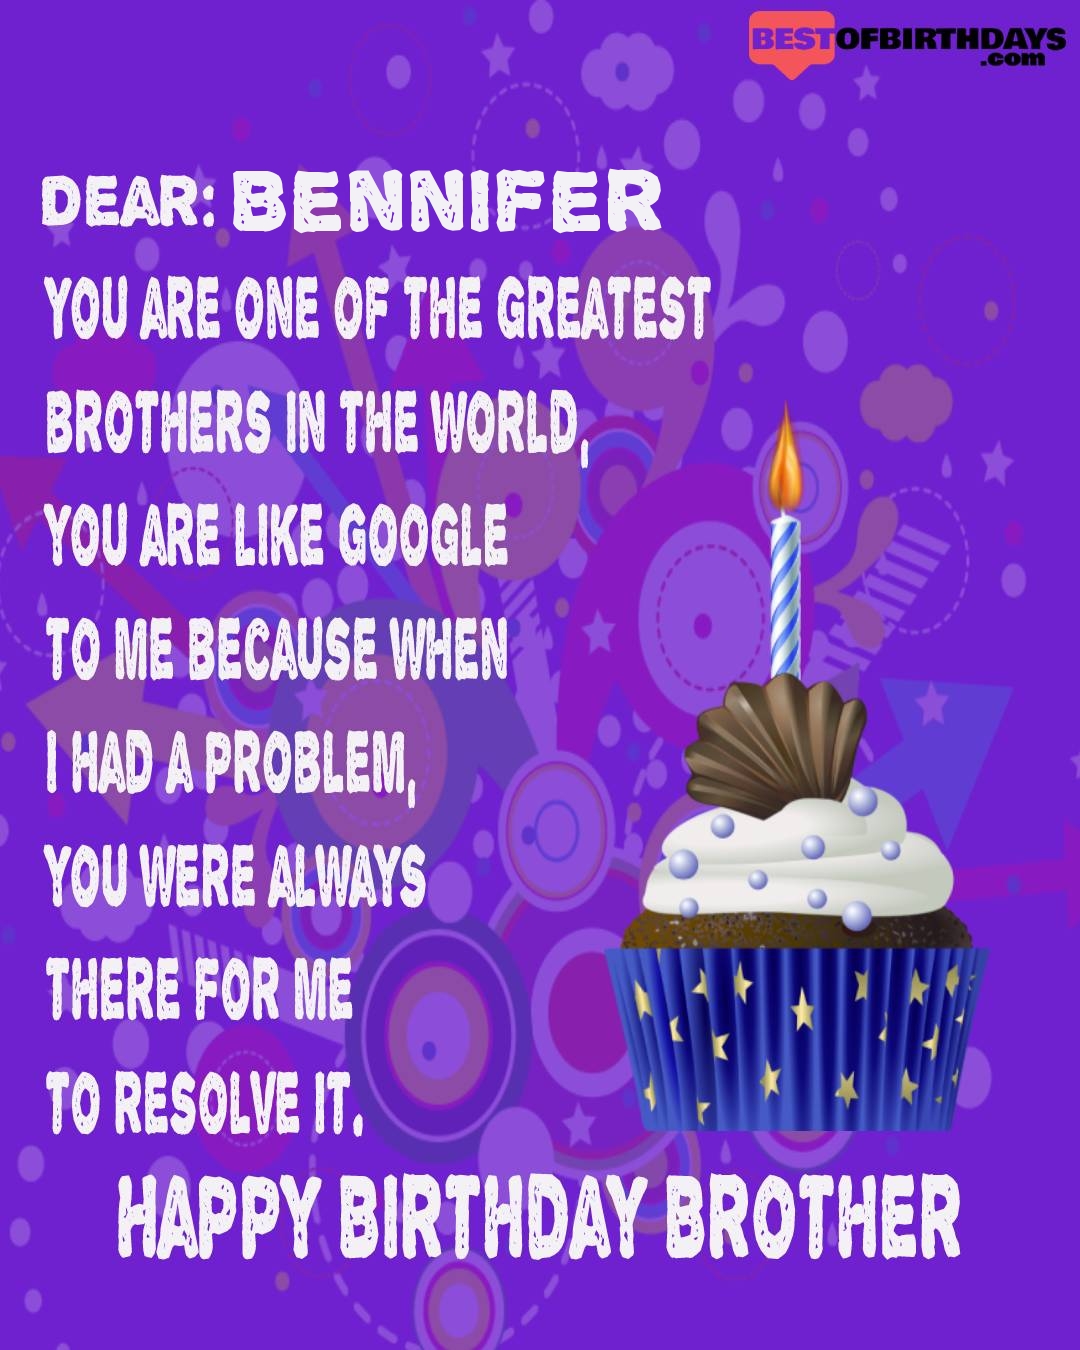 Happy birthday bennifer bhai brother bro